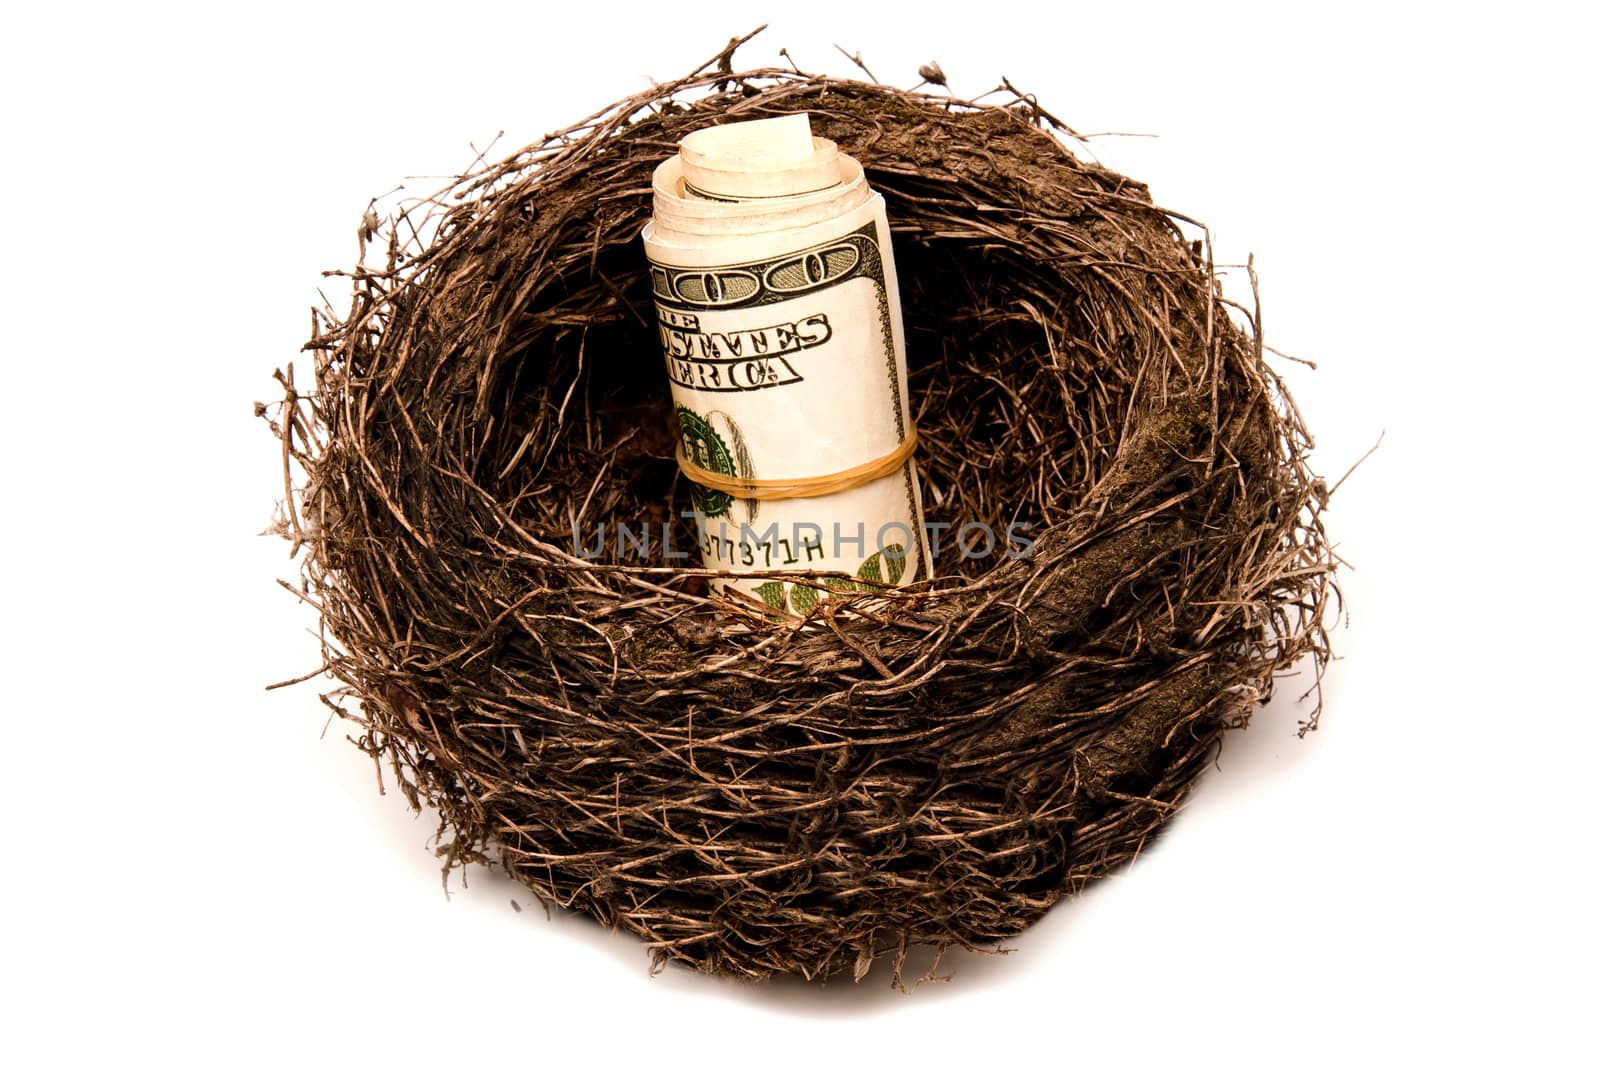 Retirement Nest by stockbuster1